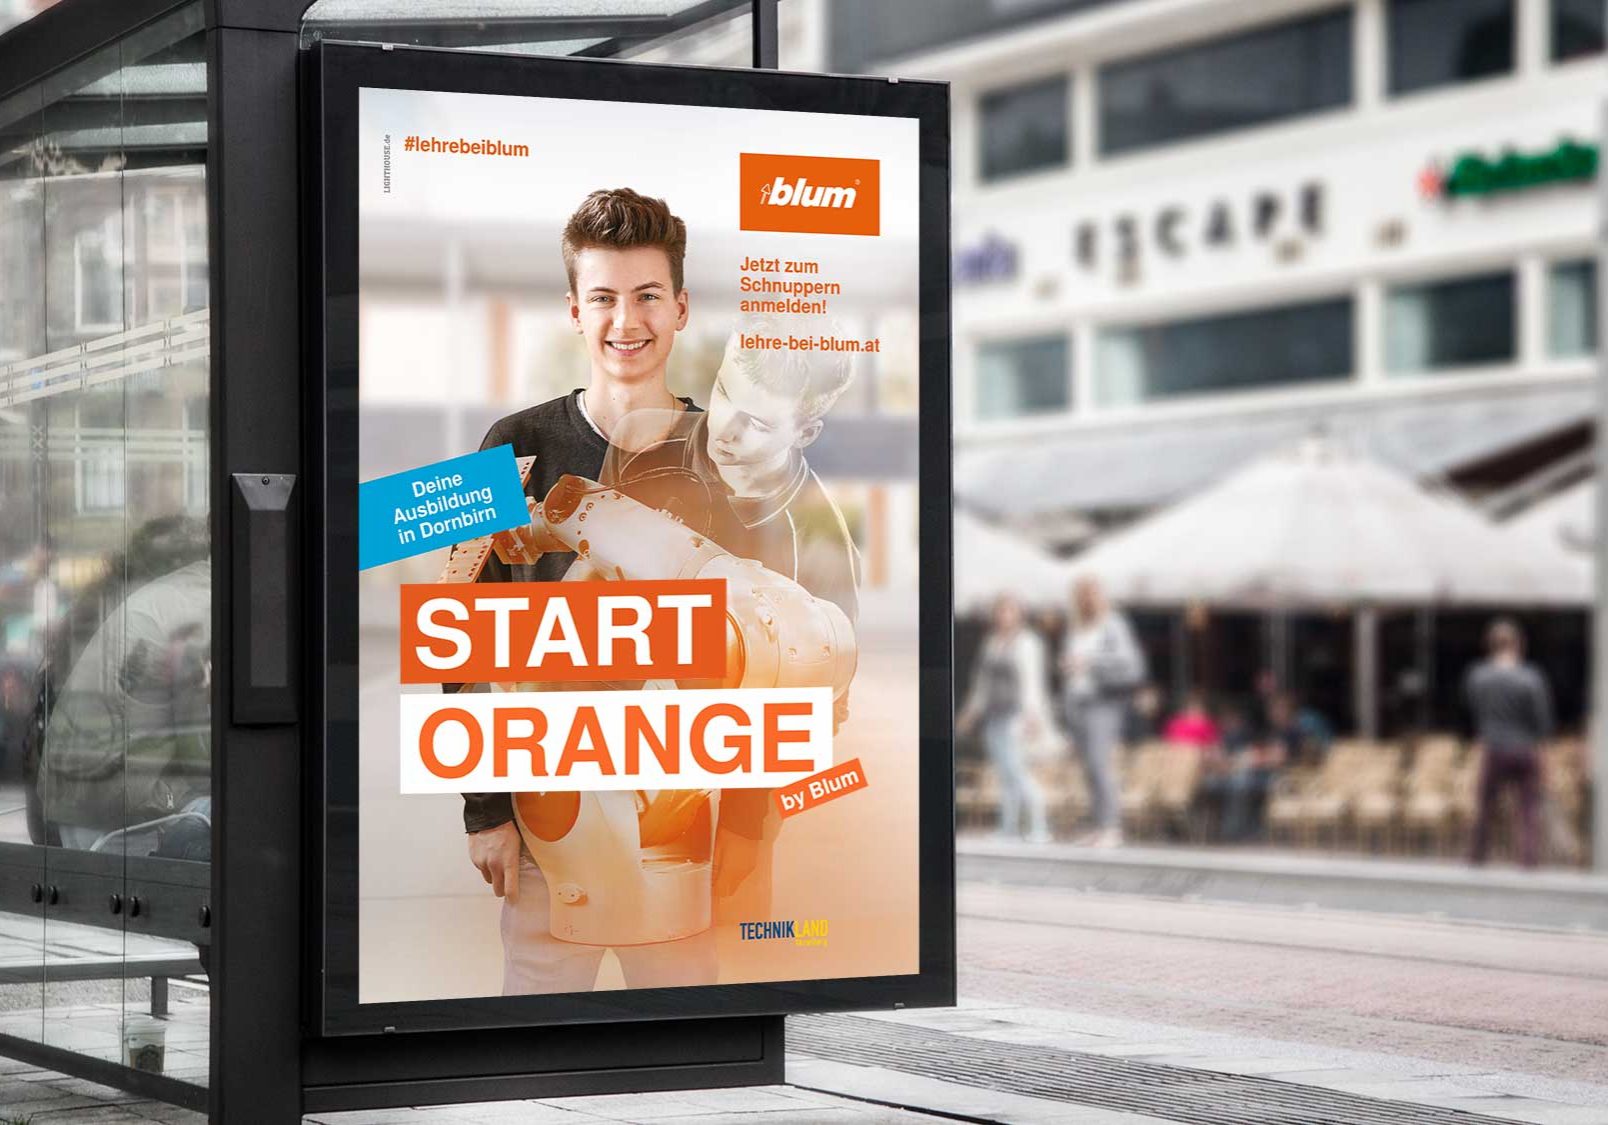 Blum Lehrlingswerbung Kampagne Start Orange Plakat Bushaltestelle